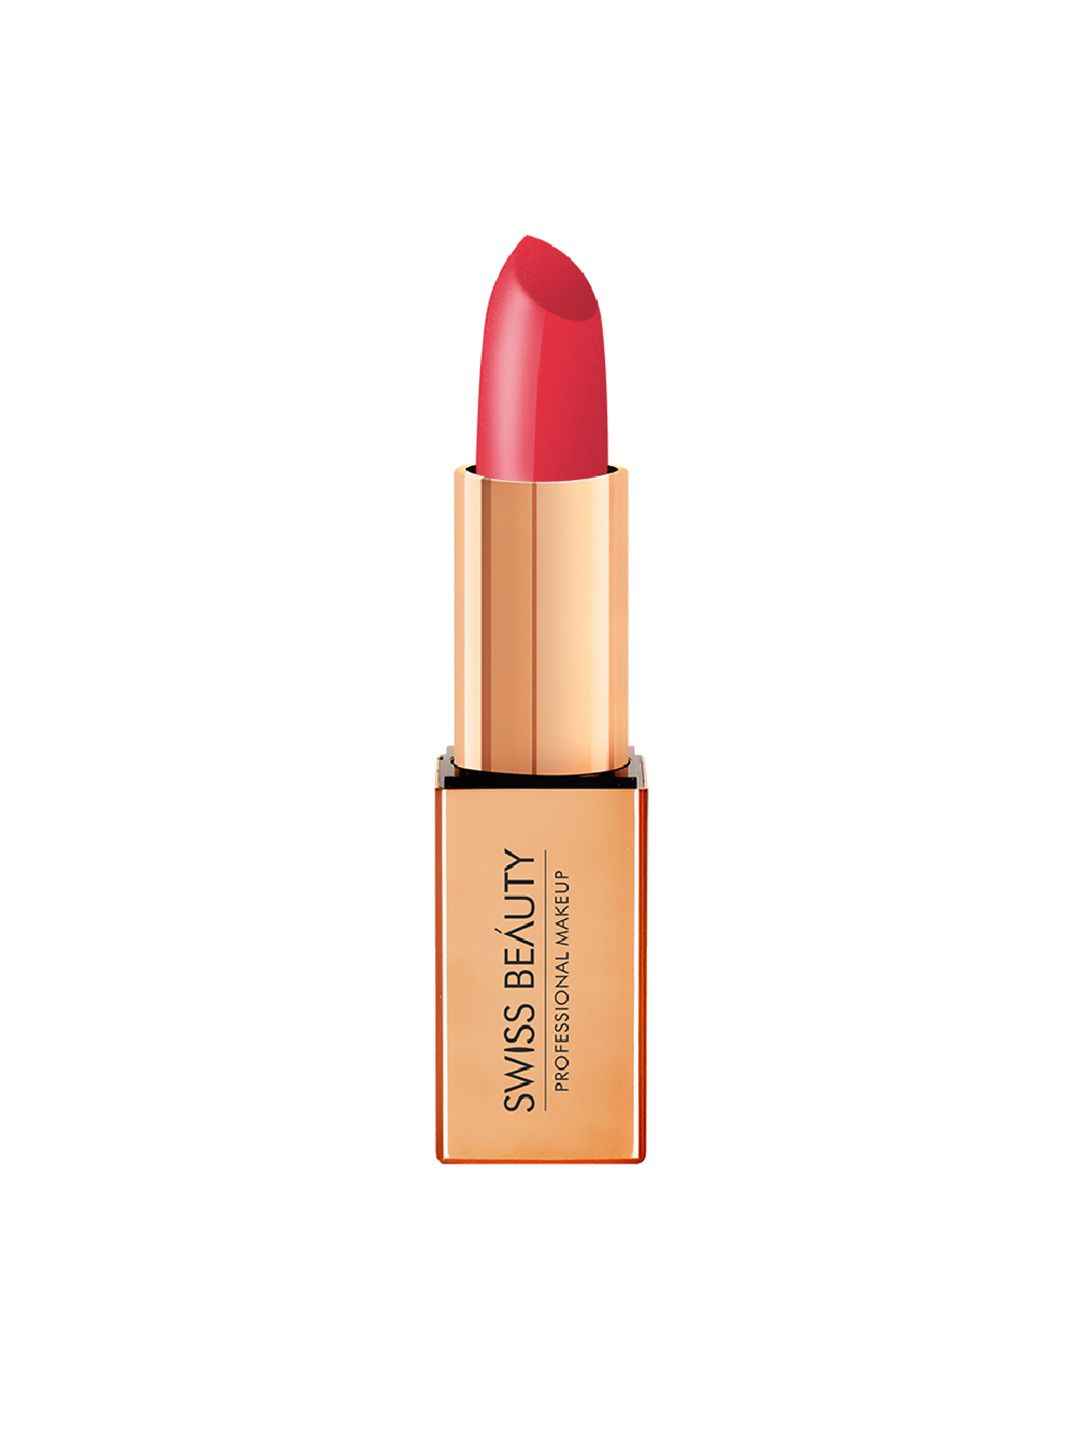 SWISS BEAUTY Silk Matte Lipstick - Russian Red 01 Price in India